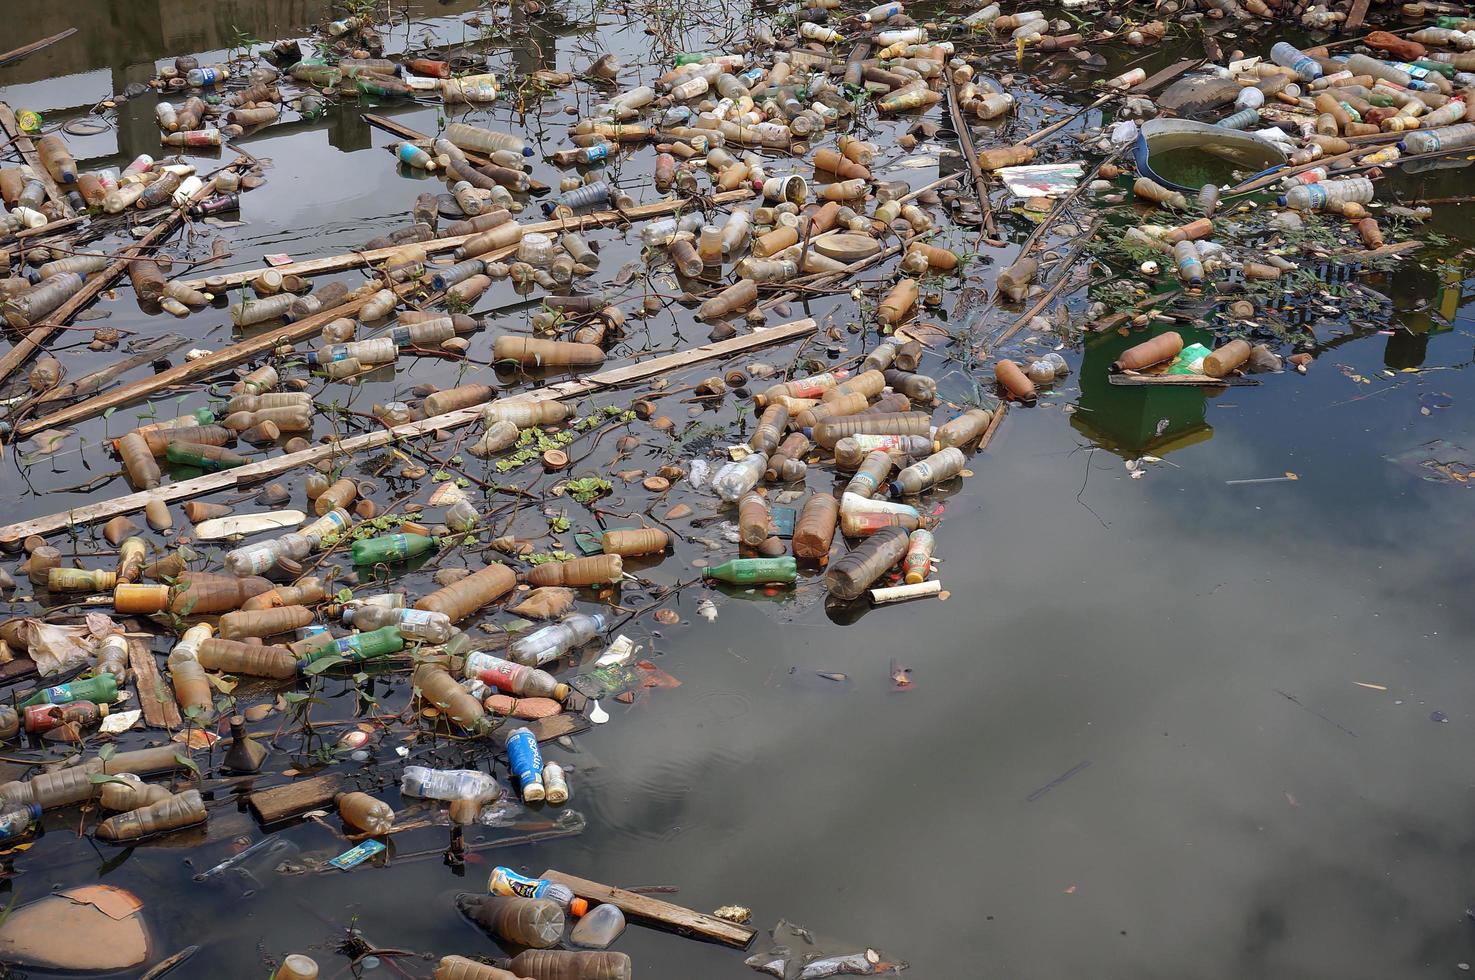 Sangatta, East kutai, East kalimantan, Indonesia, 2022 - pollution of plastic waste in the reservoir. photo